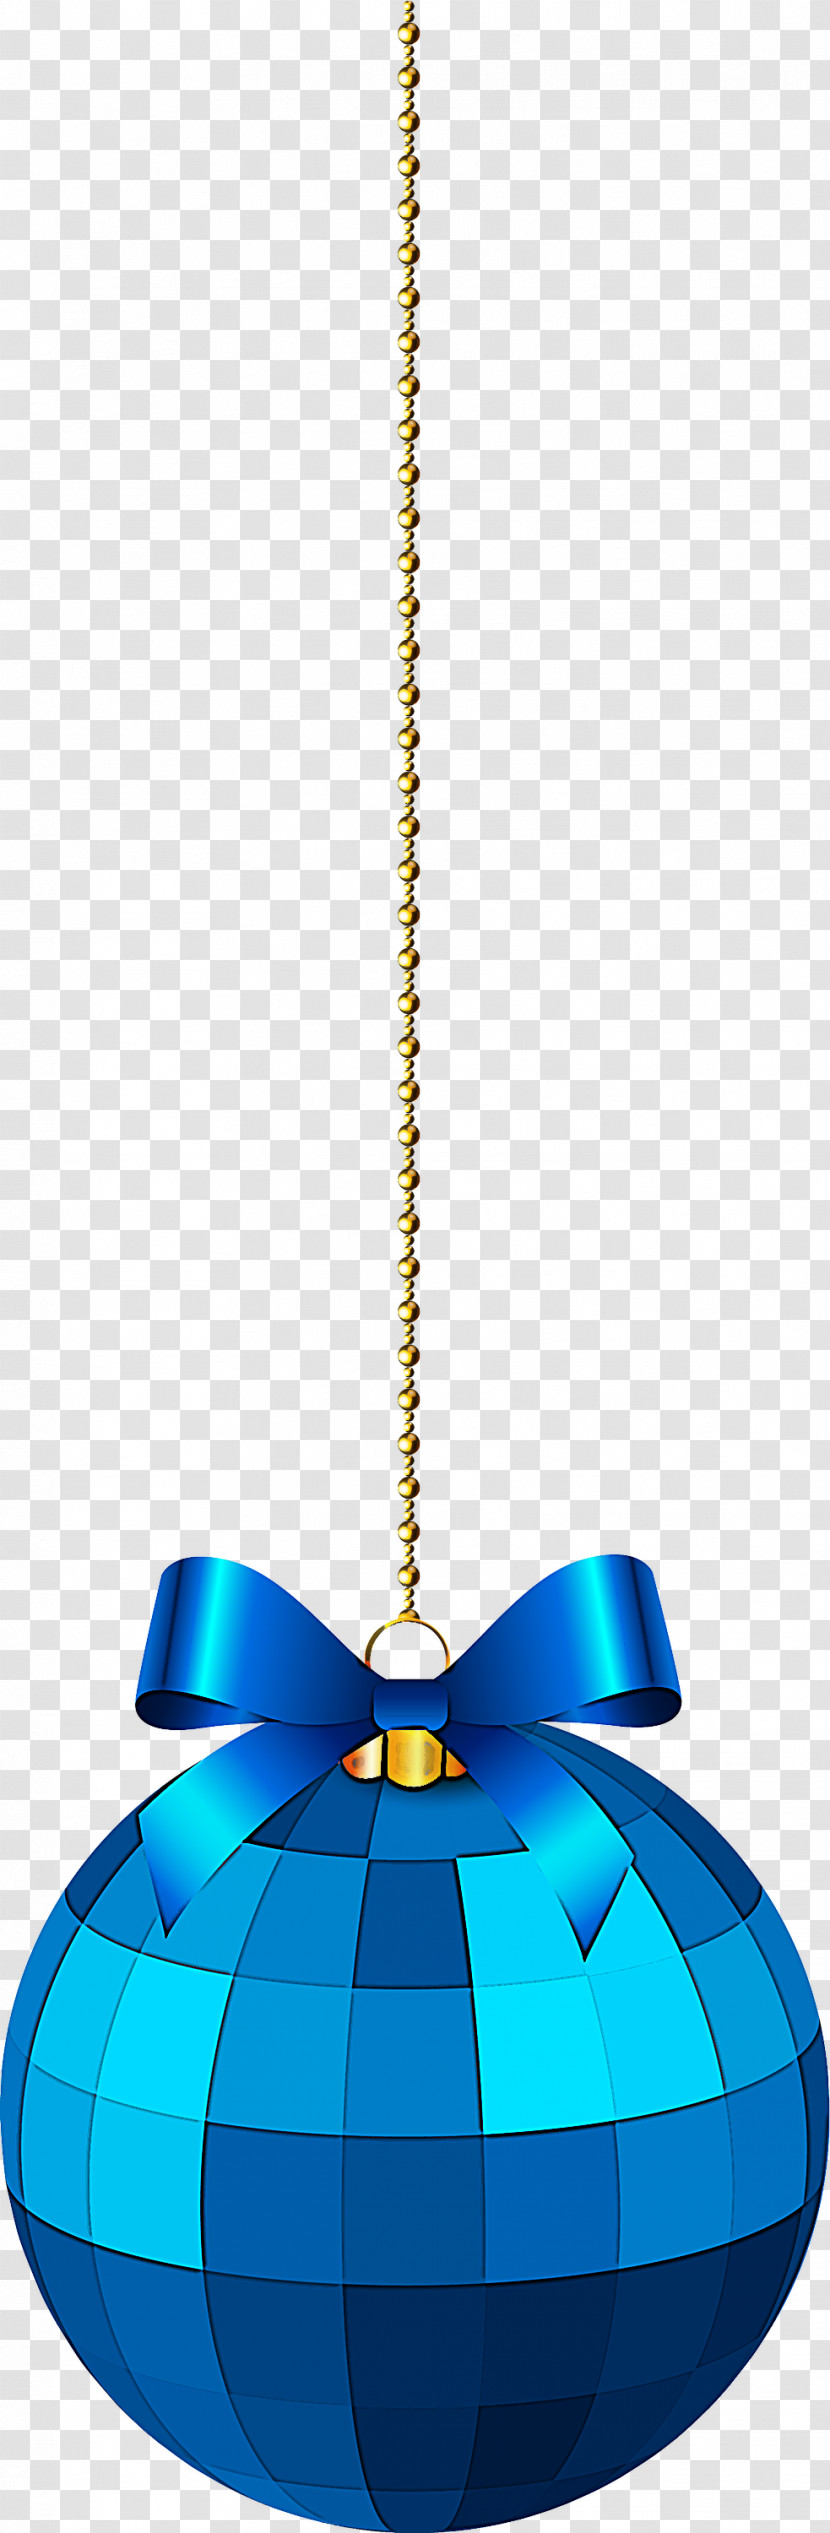 Blue Cobalt Blue Turquoise Holiday Ornament Electric Blue Transparent PNG